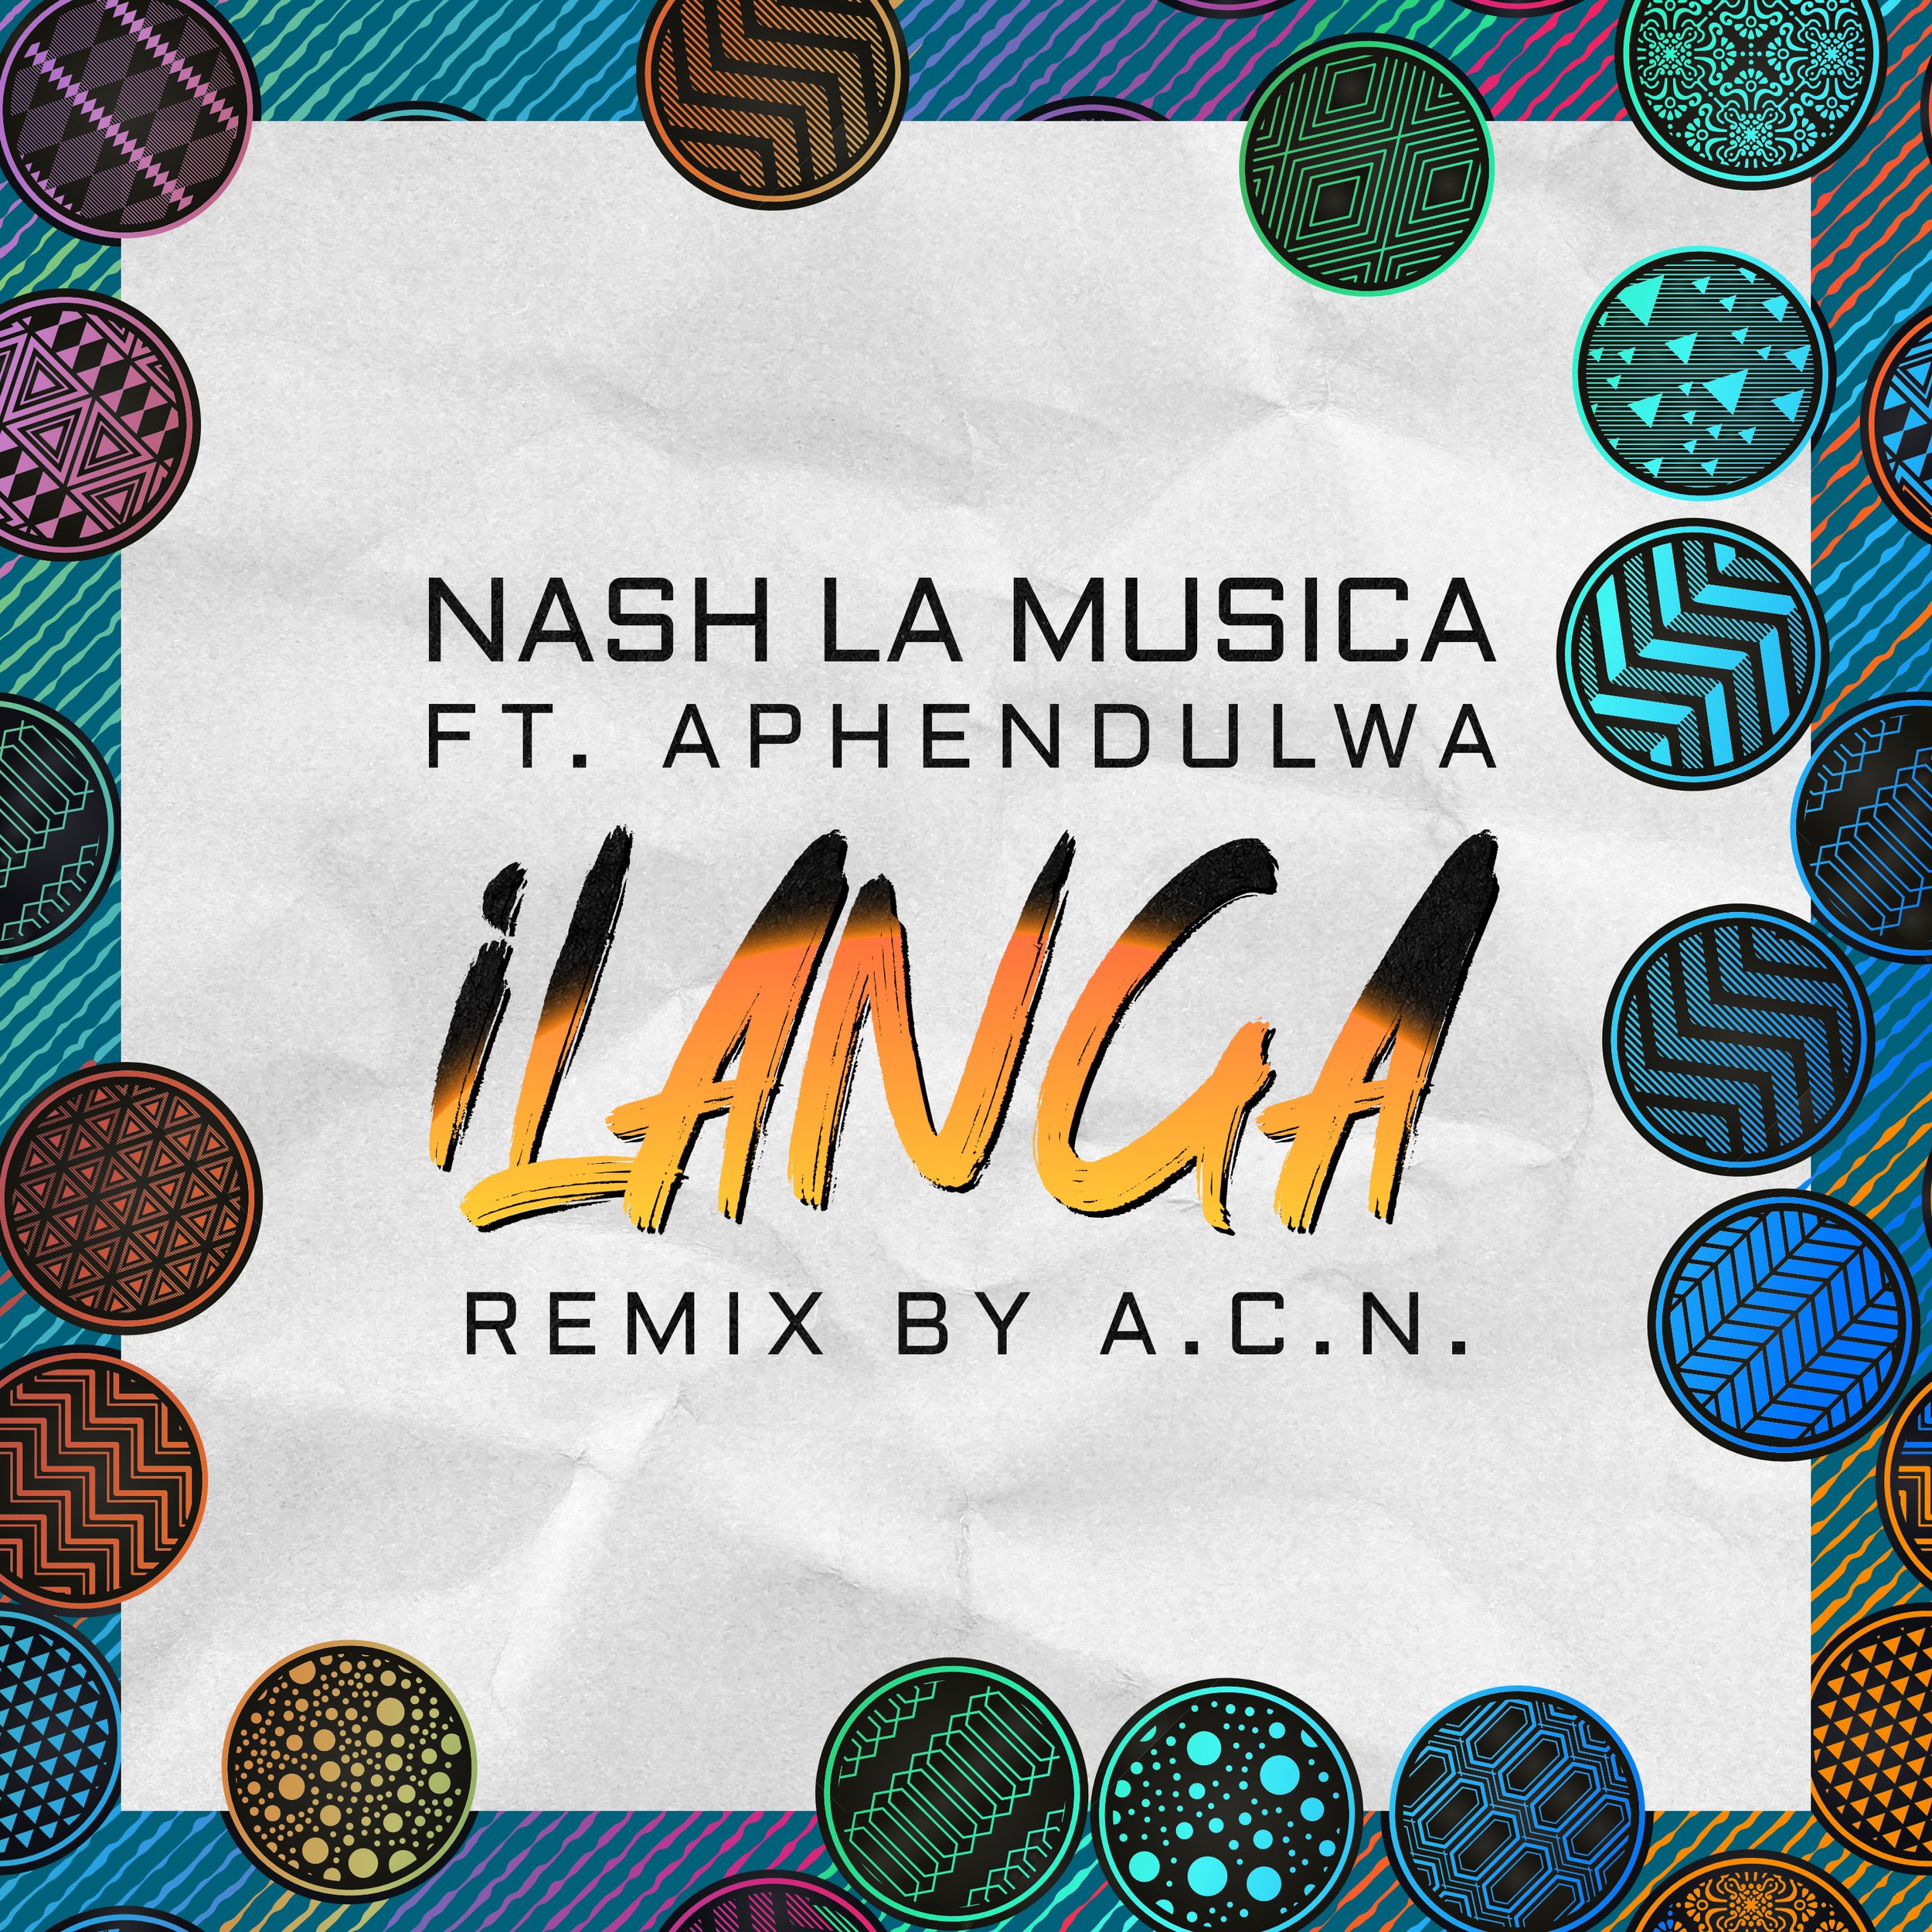 Nash La Musica Feat Aphendulwa - ARTWORK- iLanga (ACN Remix).jpg